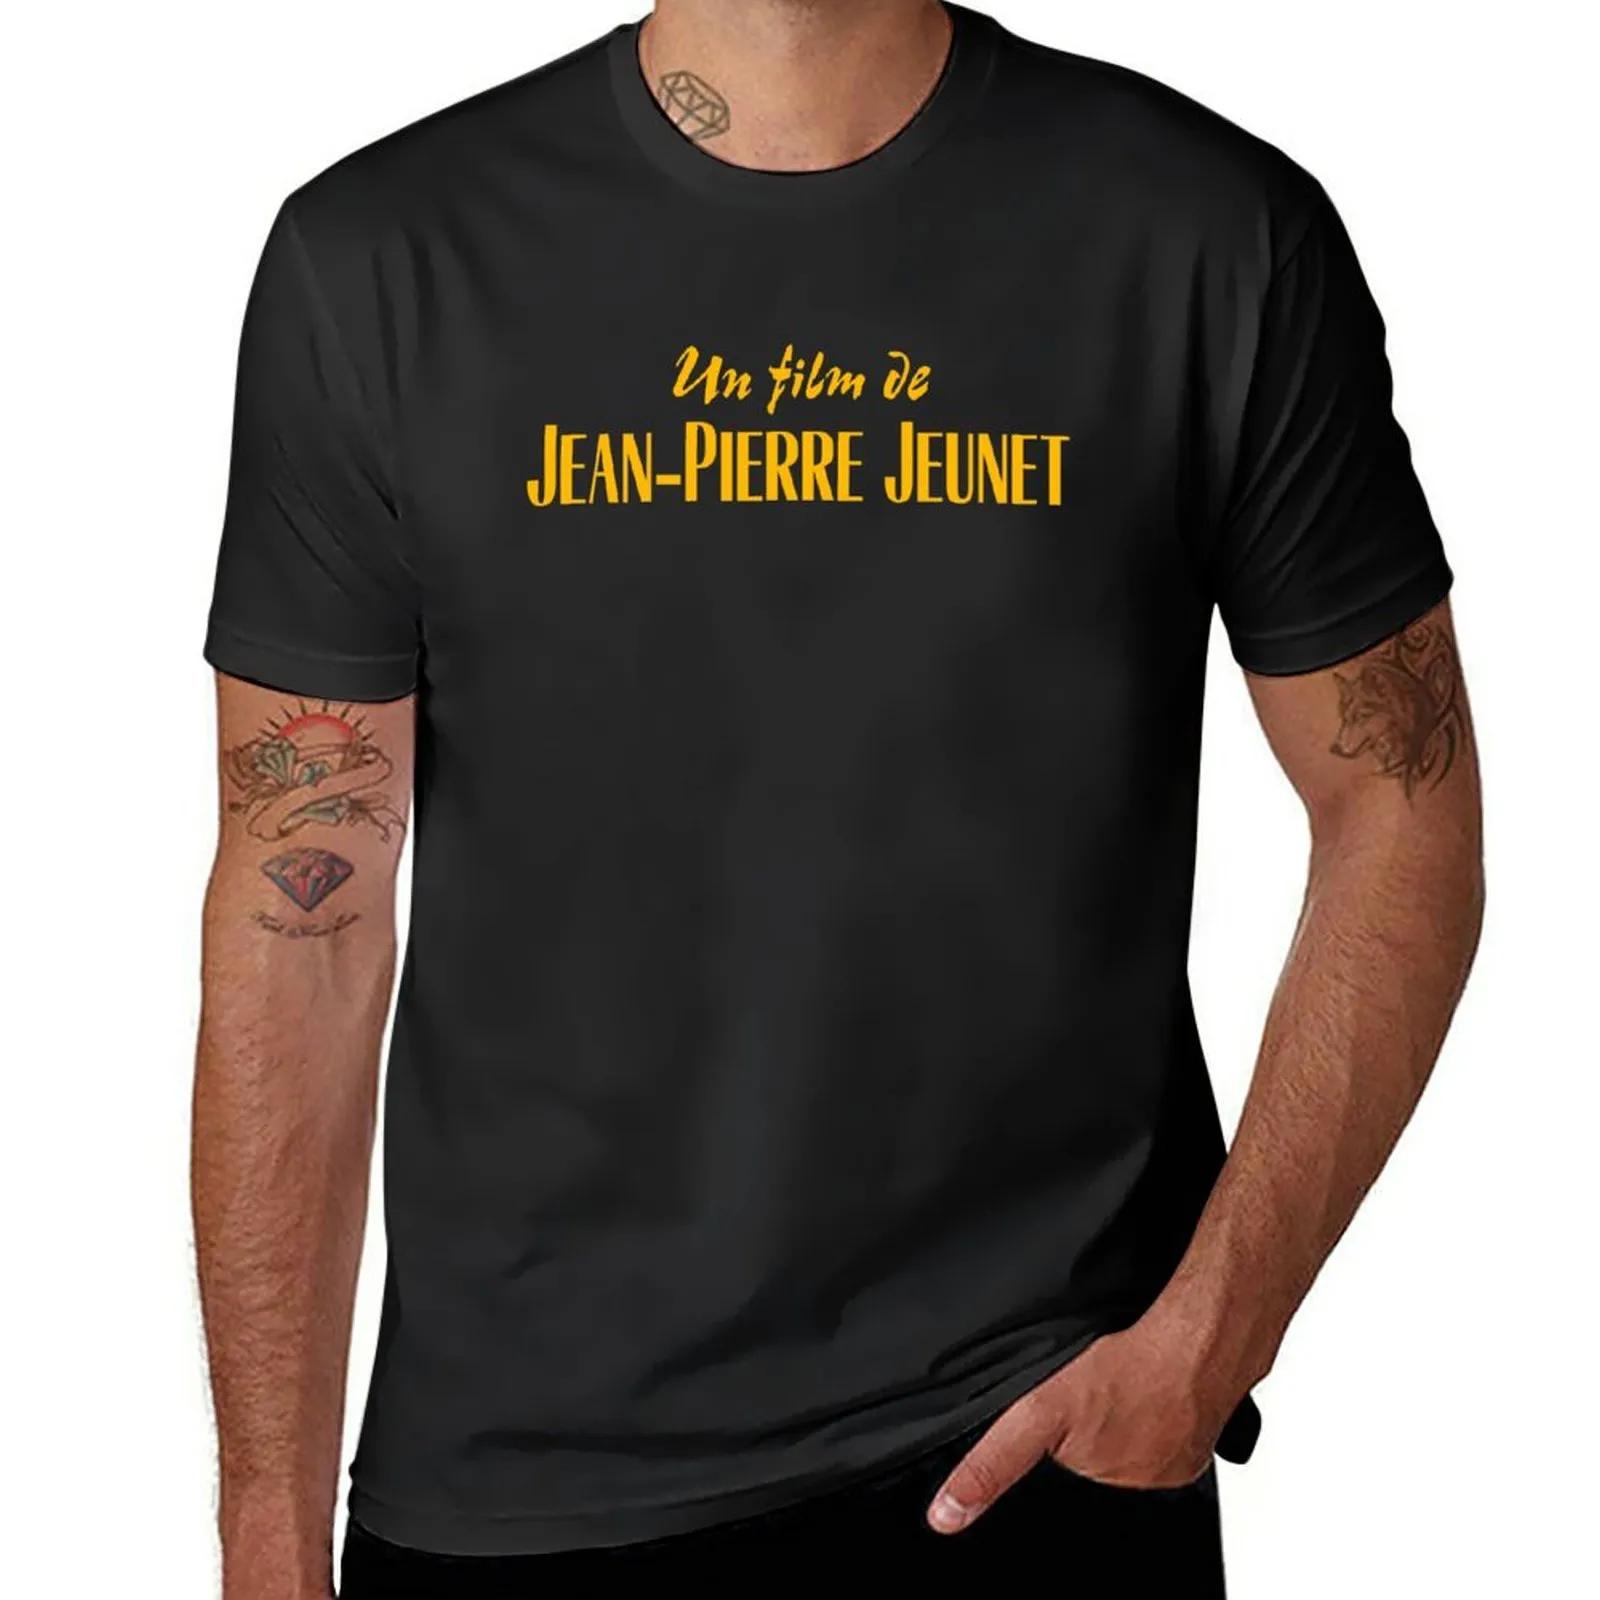 Un film de Jean-Pierre Jeunet 티셔츠, 카와이 의류, 남자 의류, 남자 티셔츠, 짧은 티셔츠, 팩